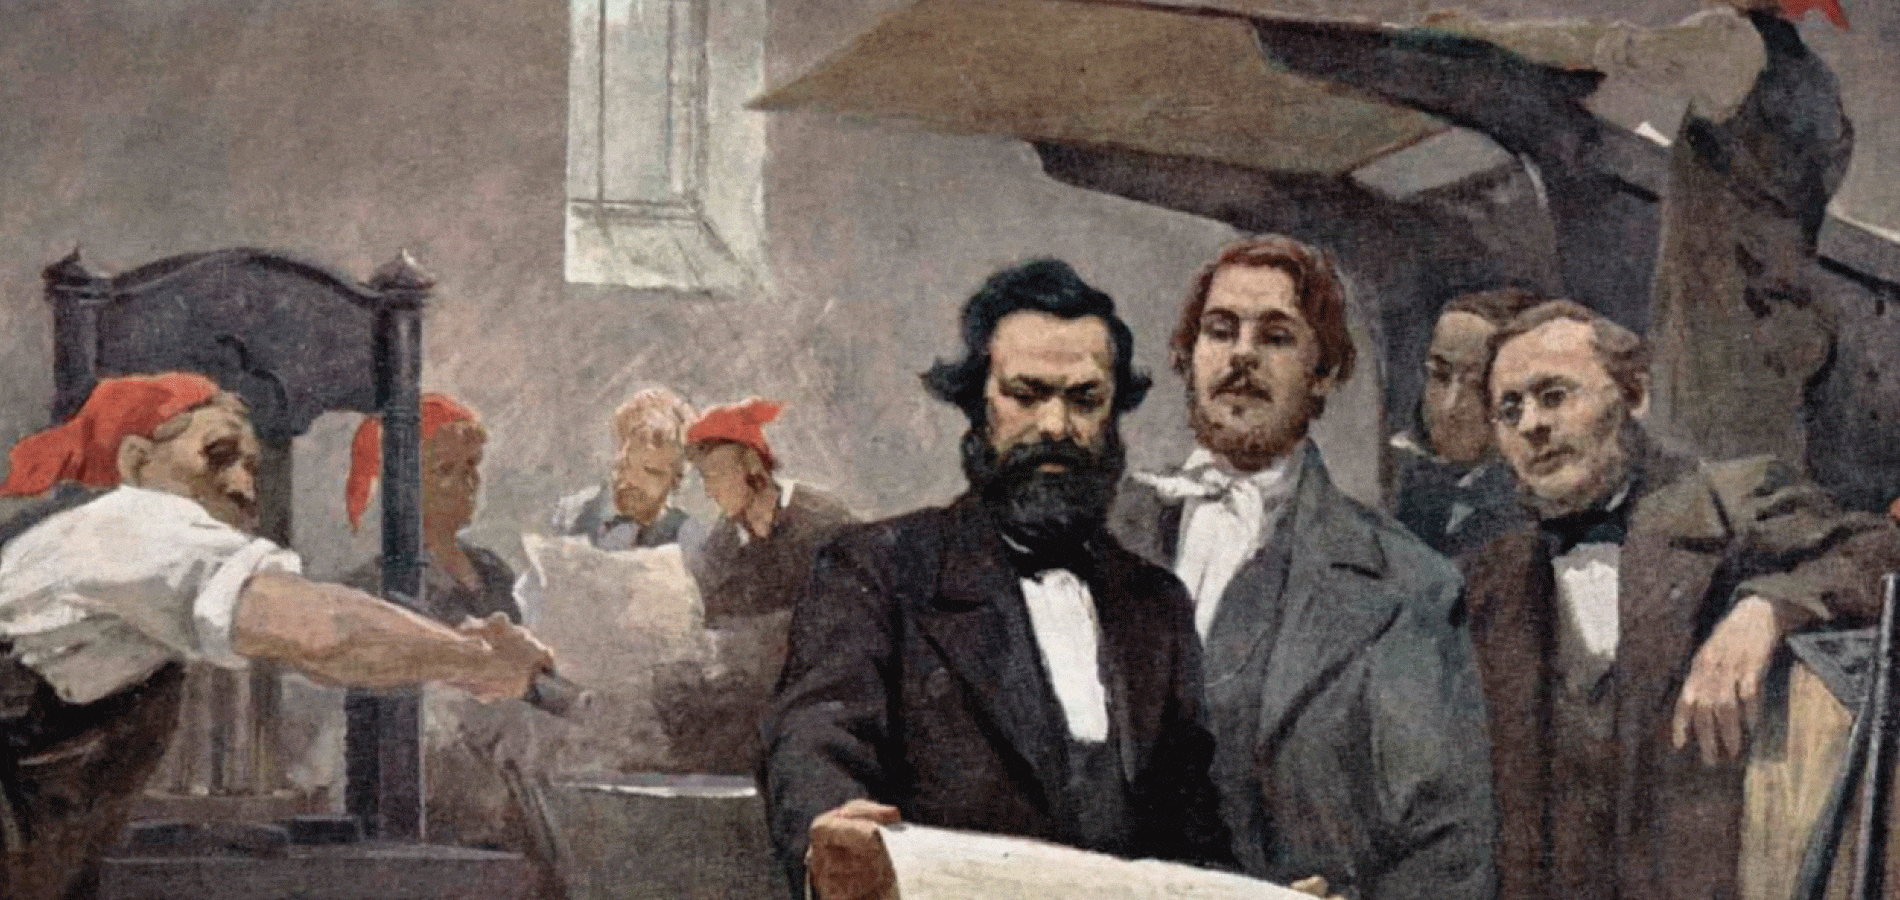 Portrait of Marx and Engels in the Rheinische Zeitung (Rhineland News) printing room